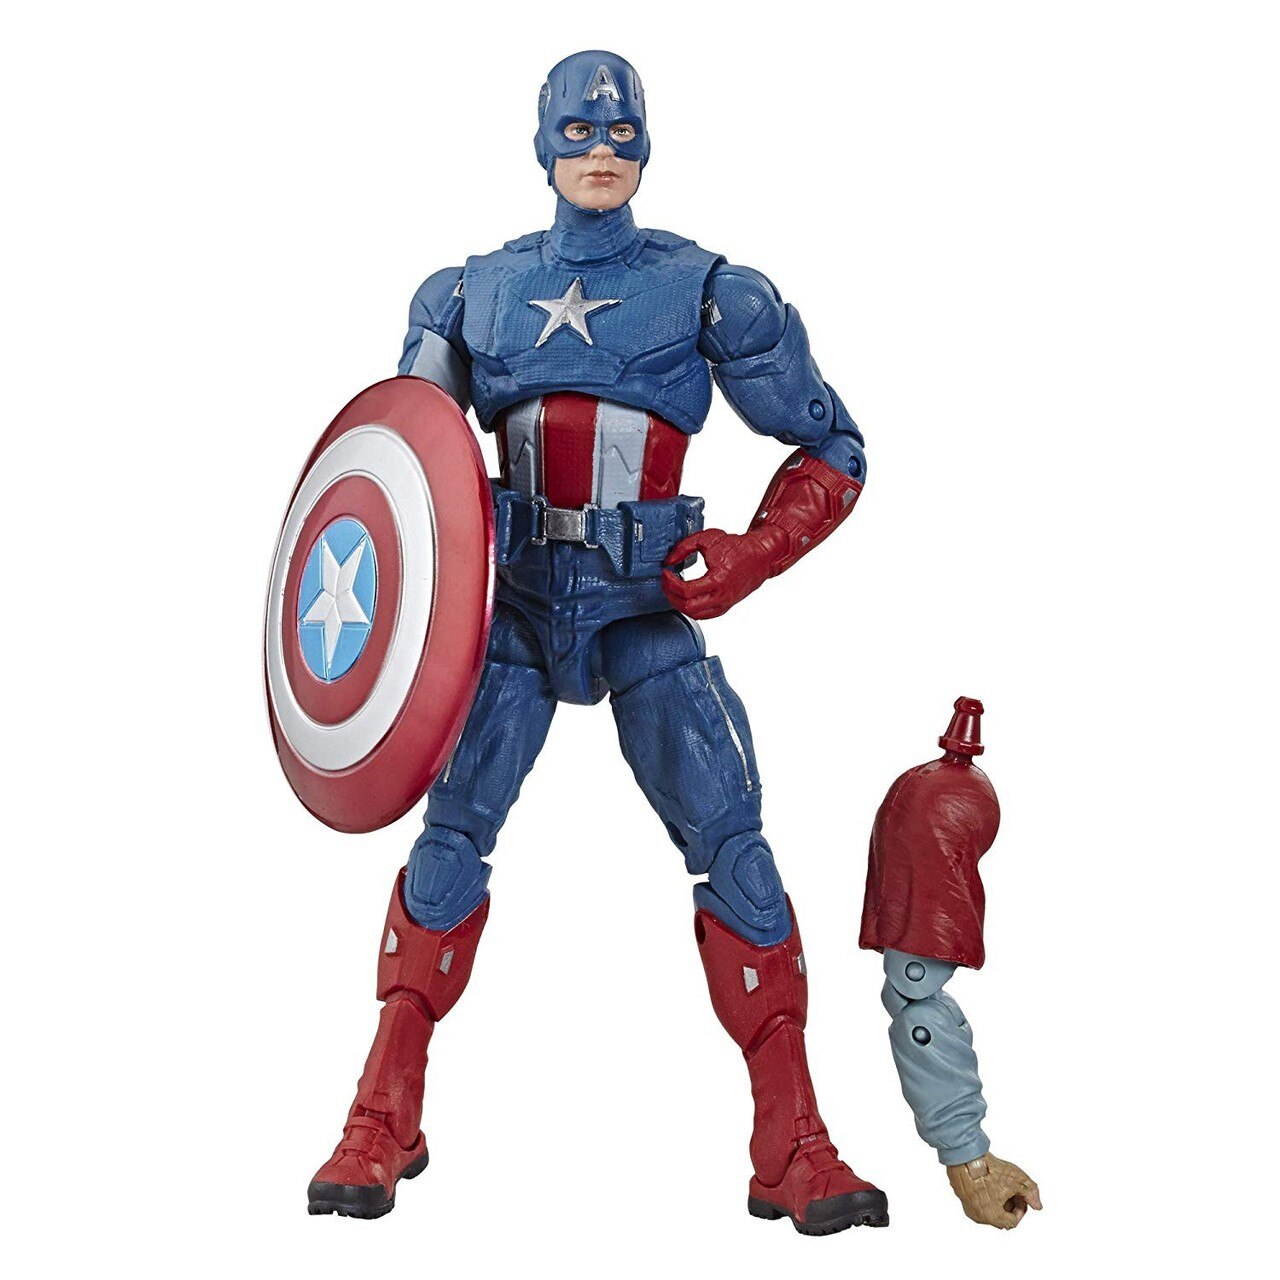 Marvel Legends Avengers Endgame Captain America Fat Thor Series Action Figure